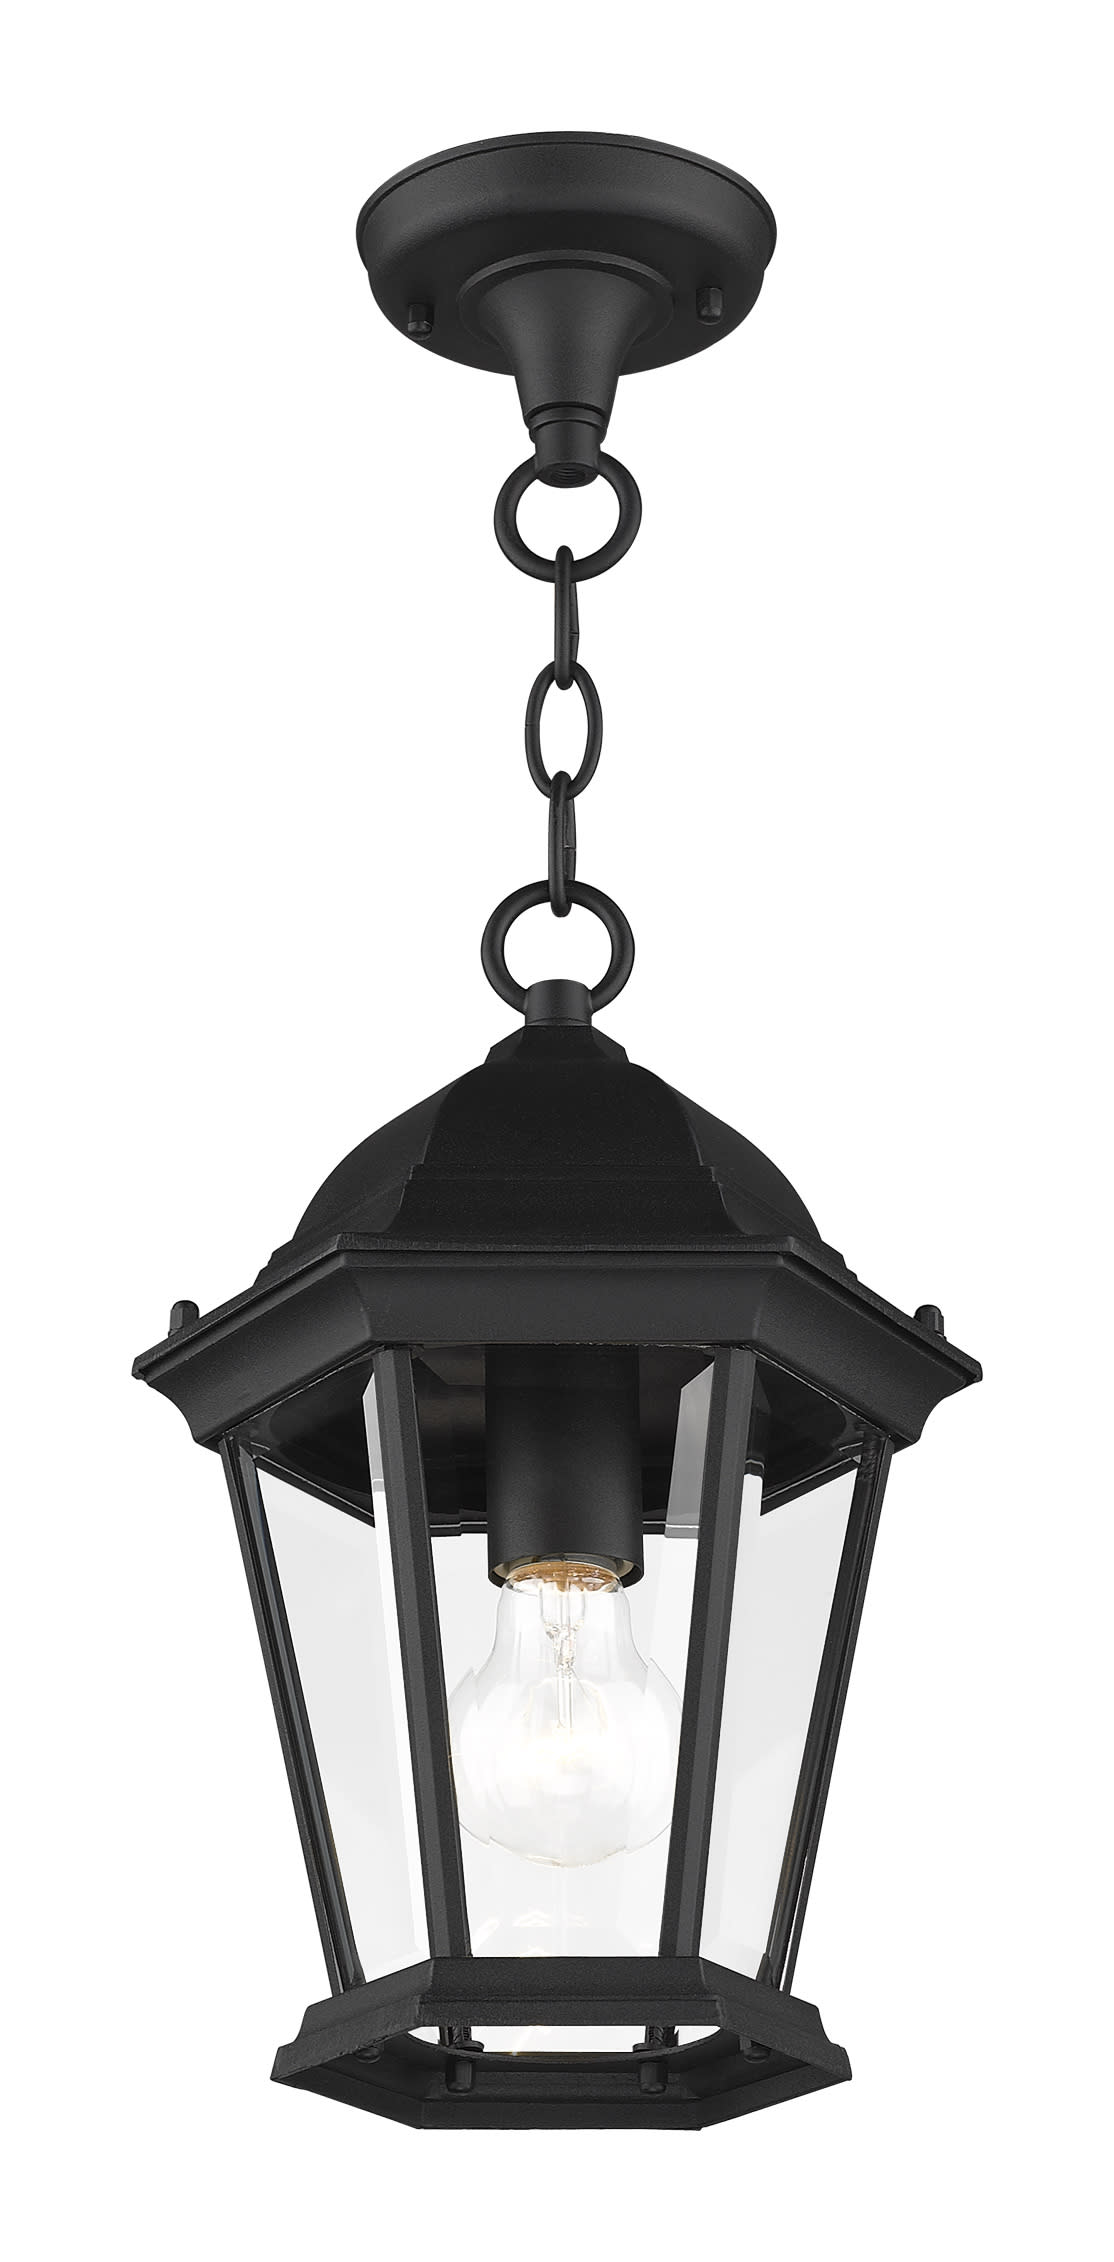 Livex Lighting 7559-07 Hamilton 1 Light Outdoor Hanging Lantern Bronze